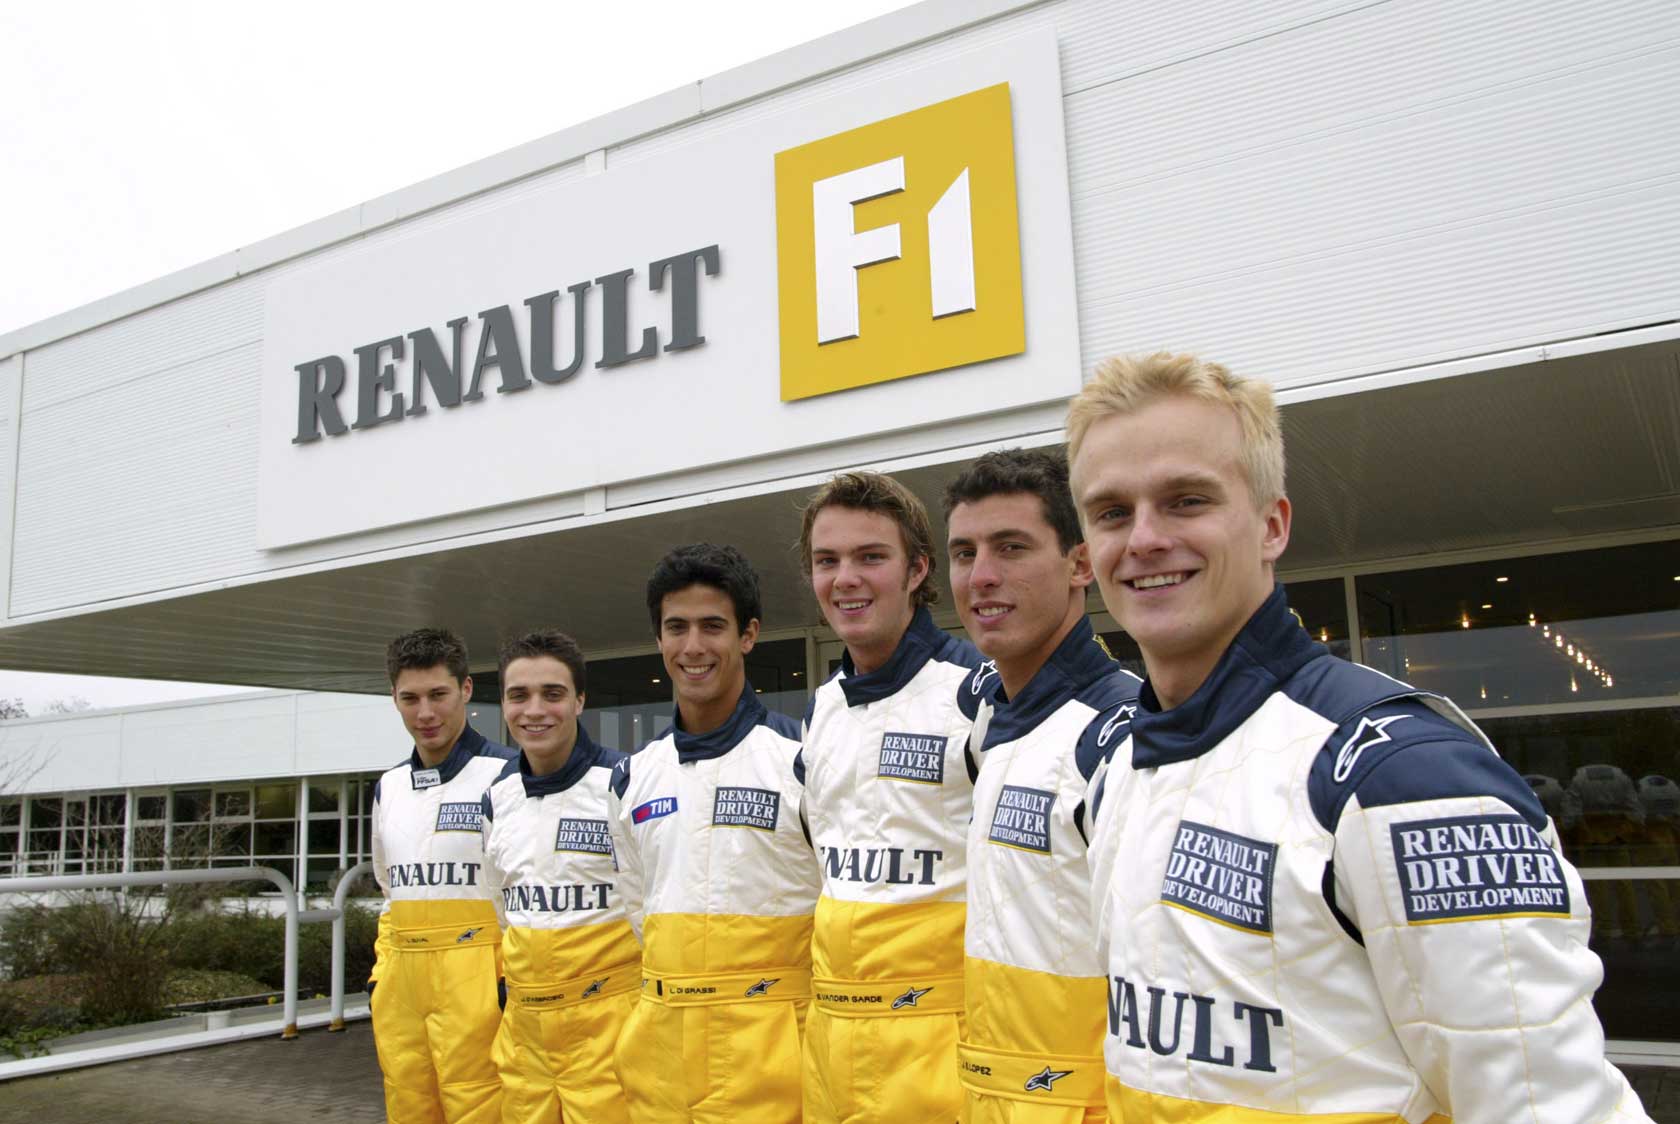 МТК Росберг. Renault Drive the change. Рено драйвер